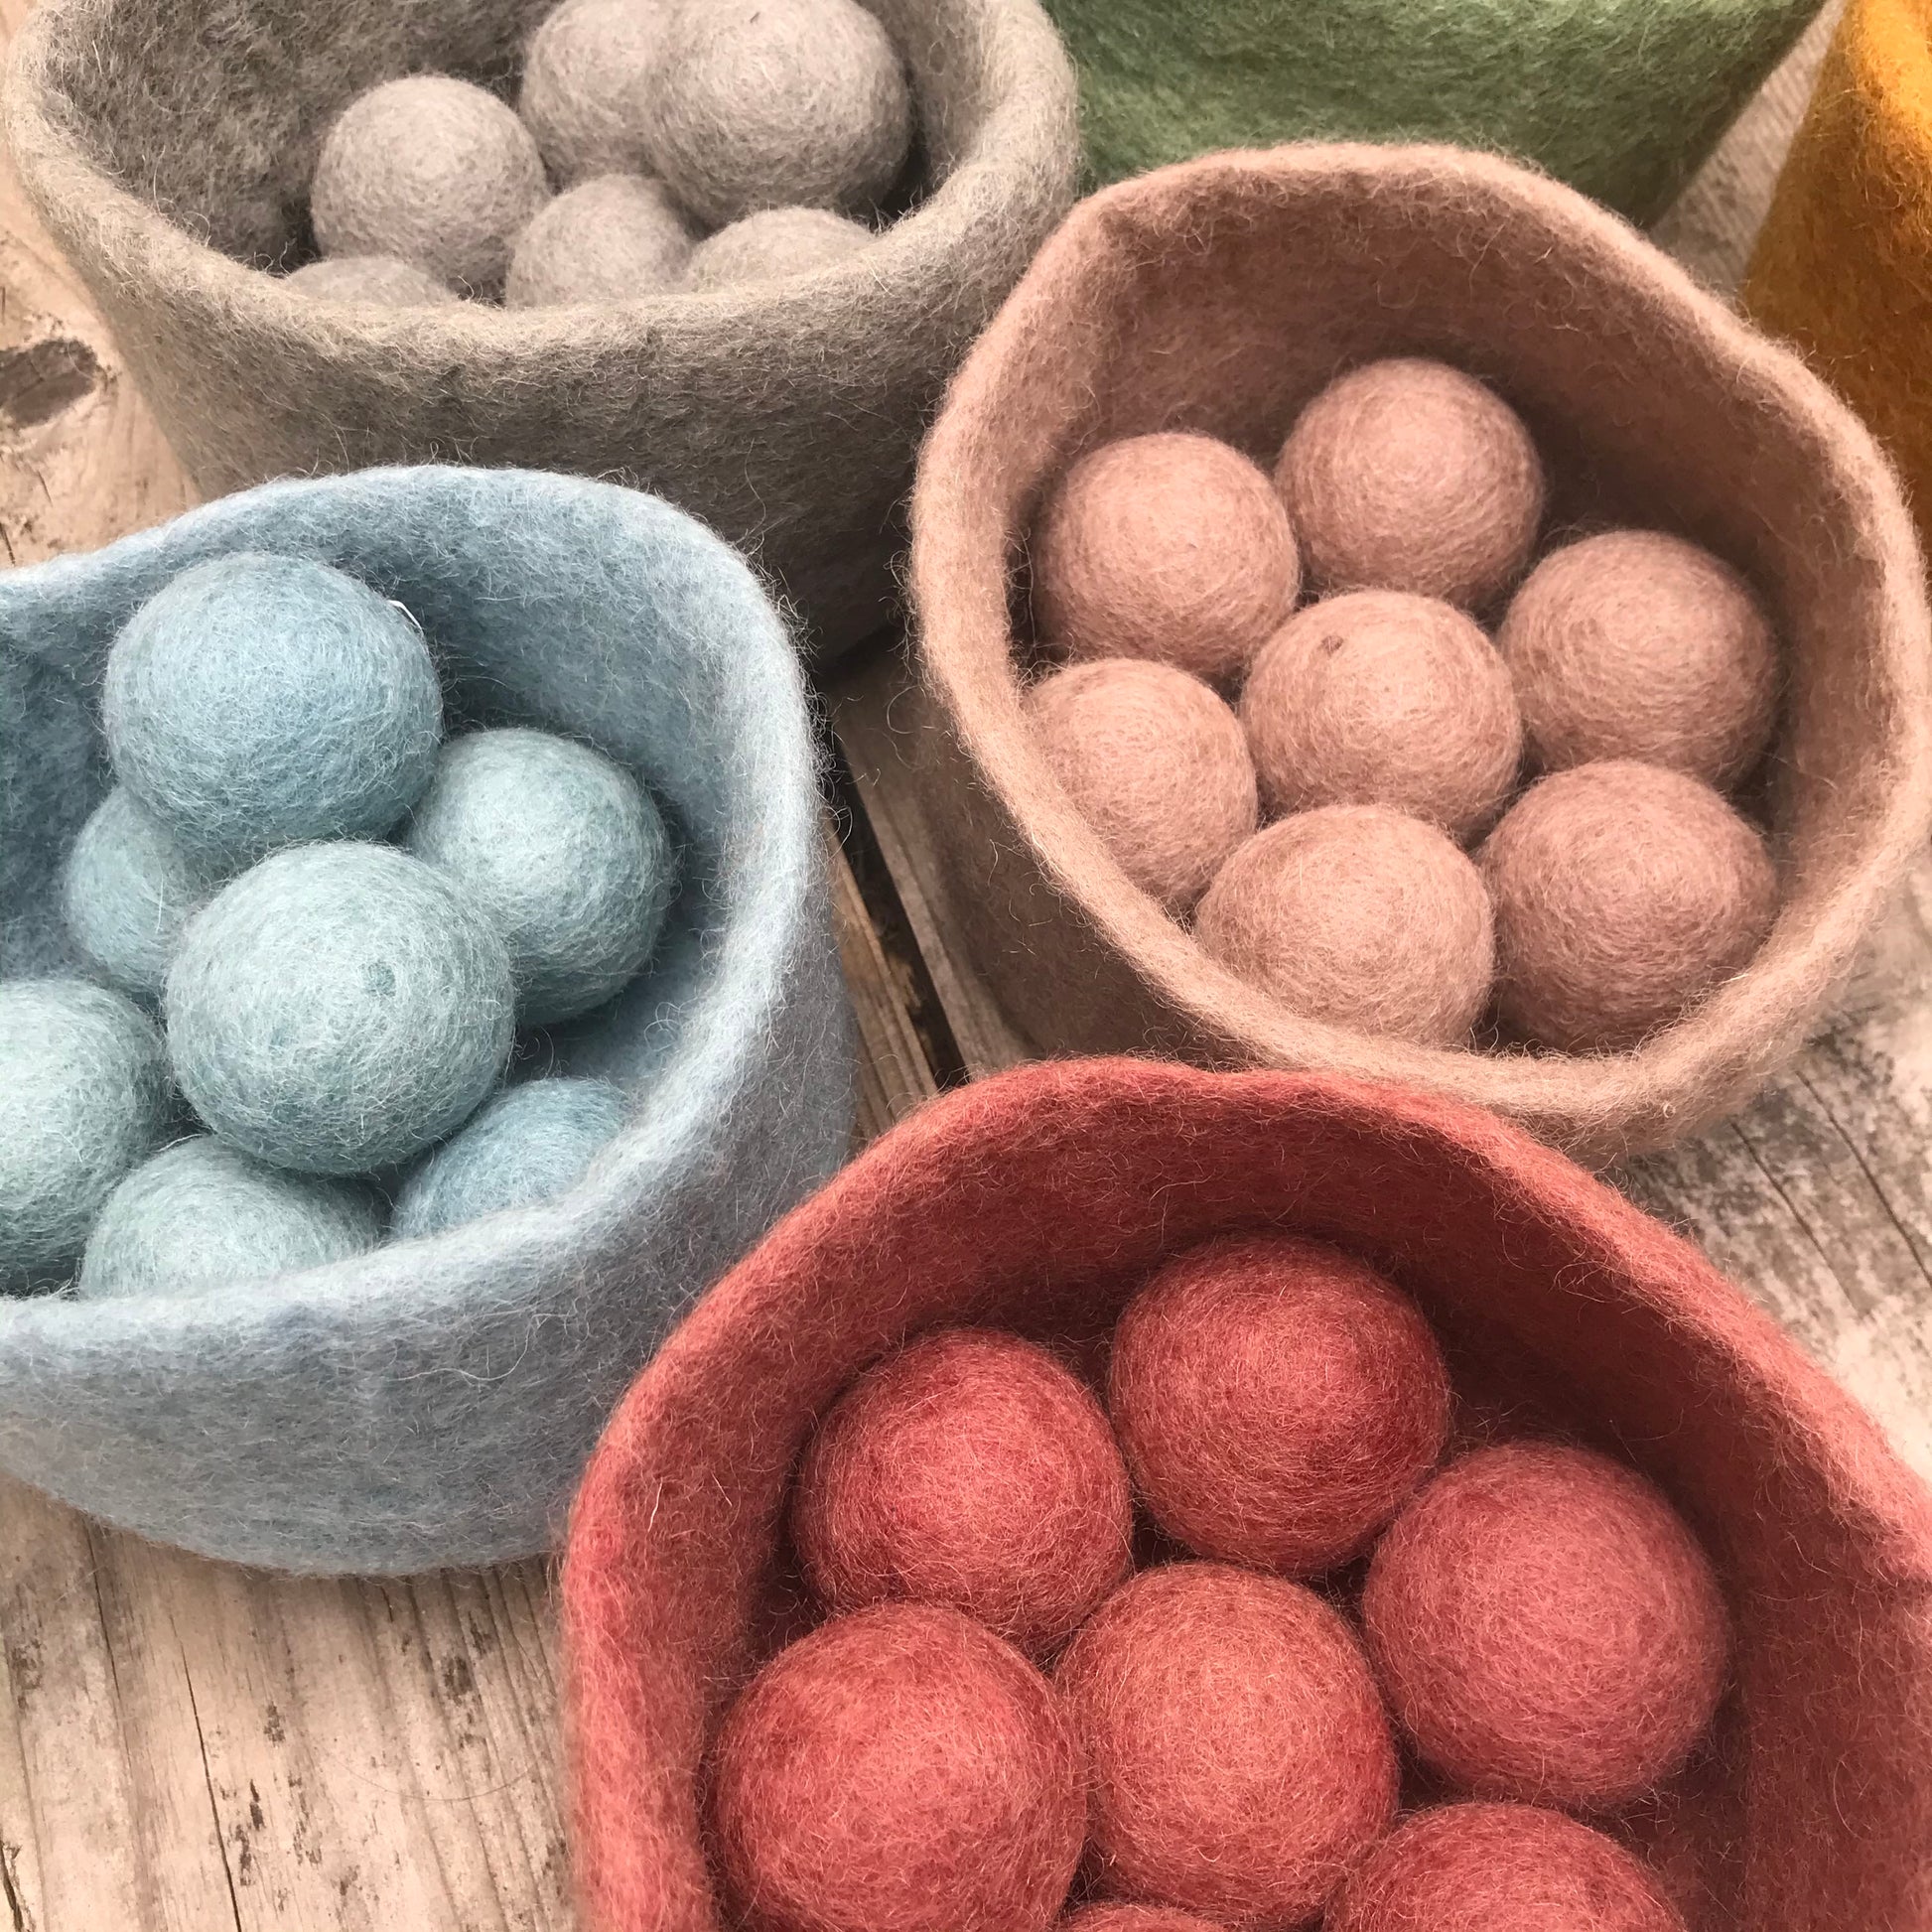 Wool Felt Earth Balls and Bowls Set